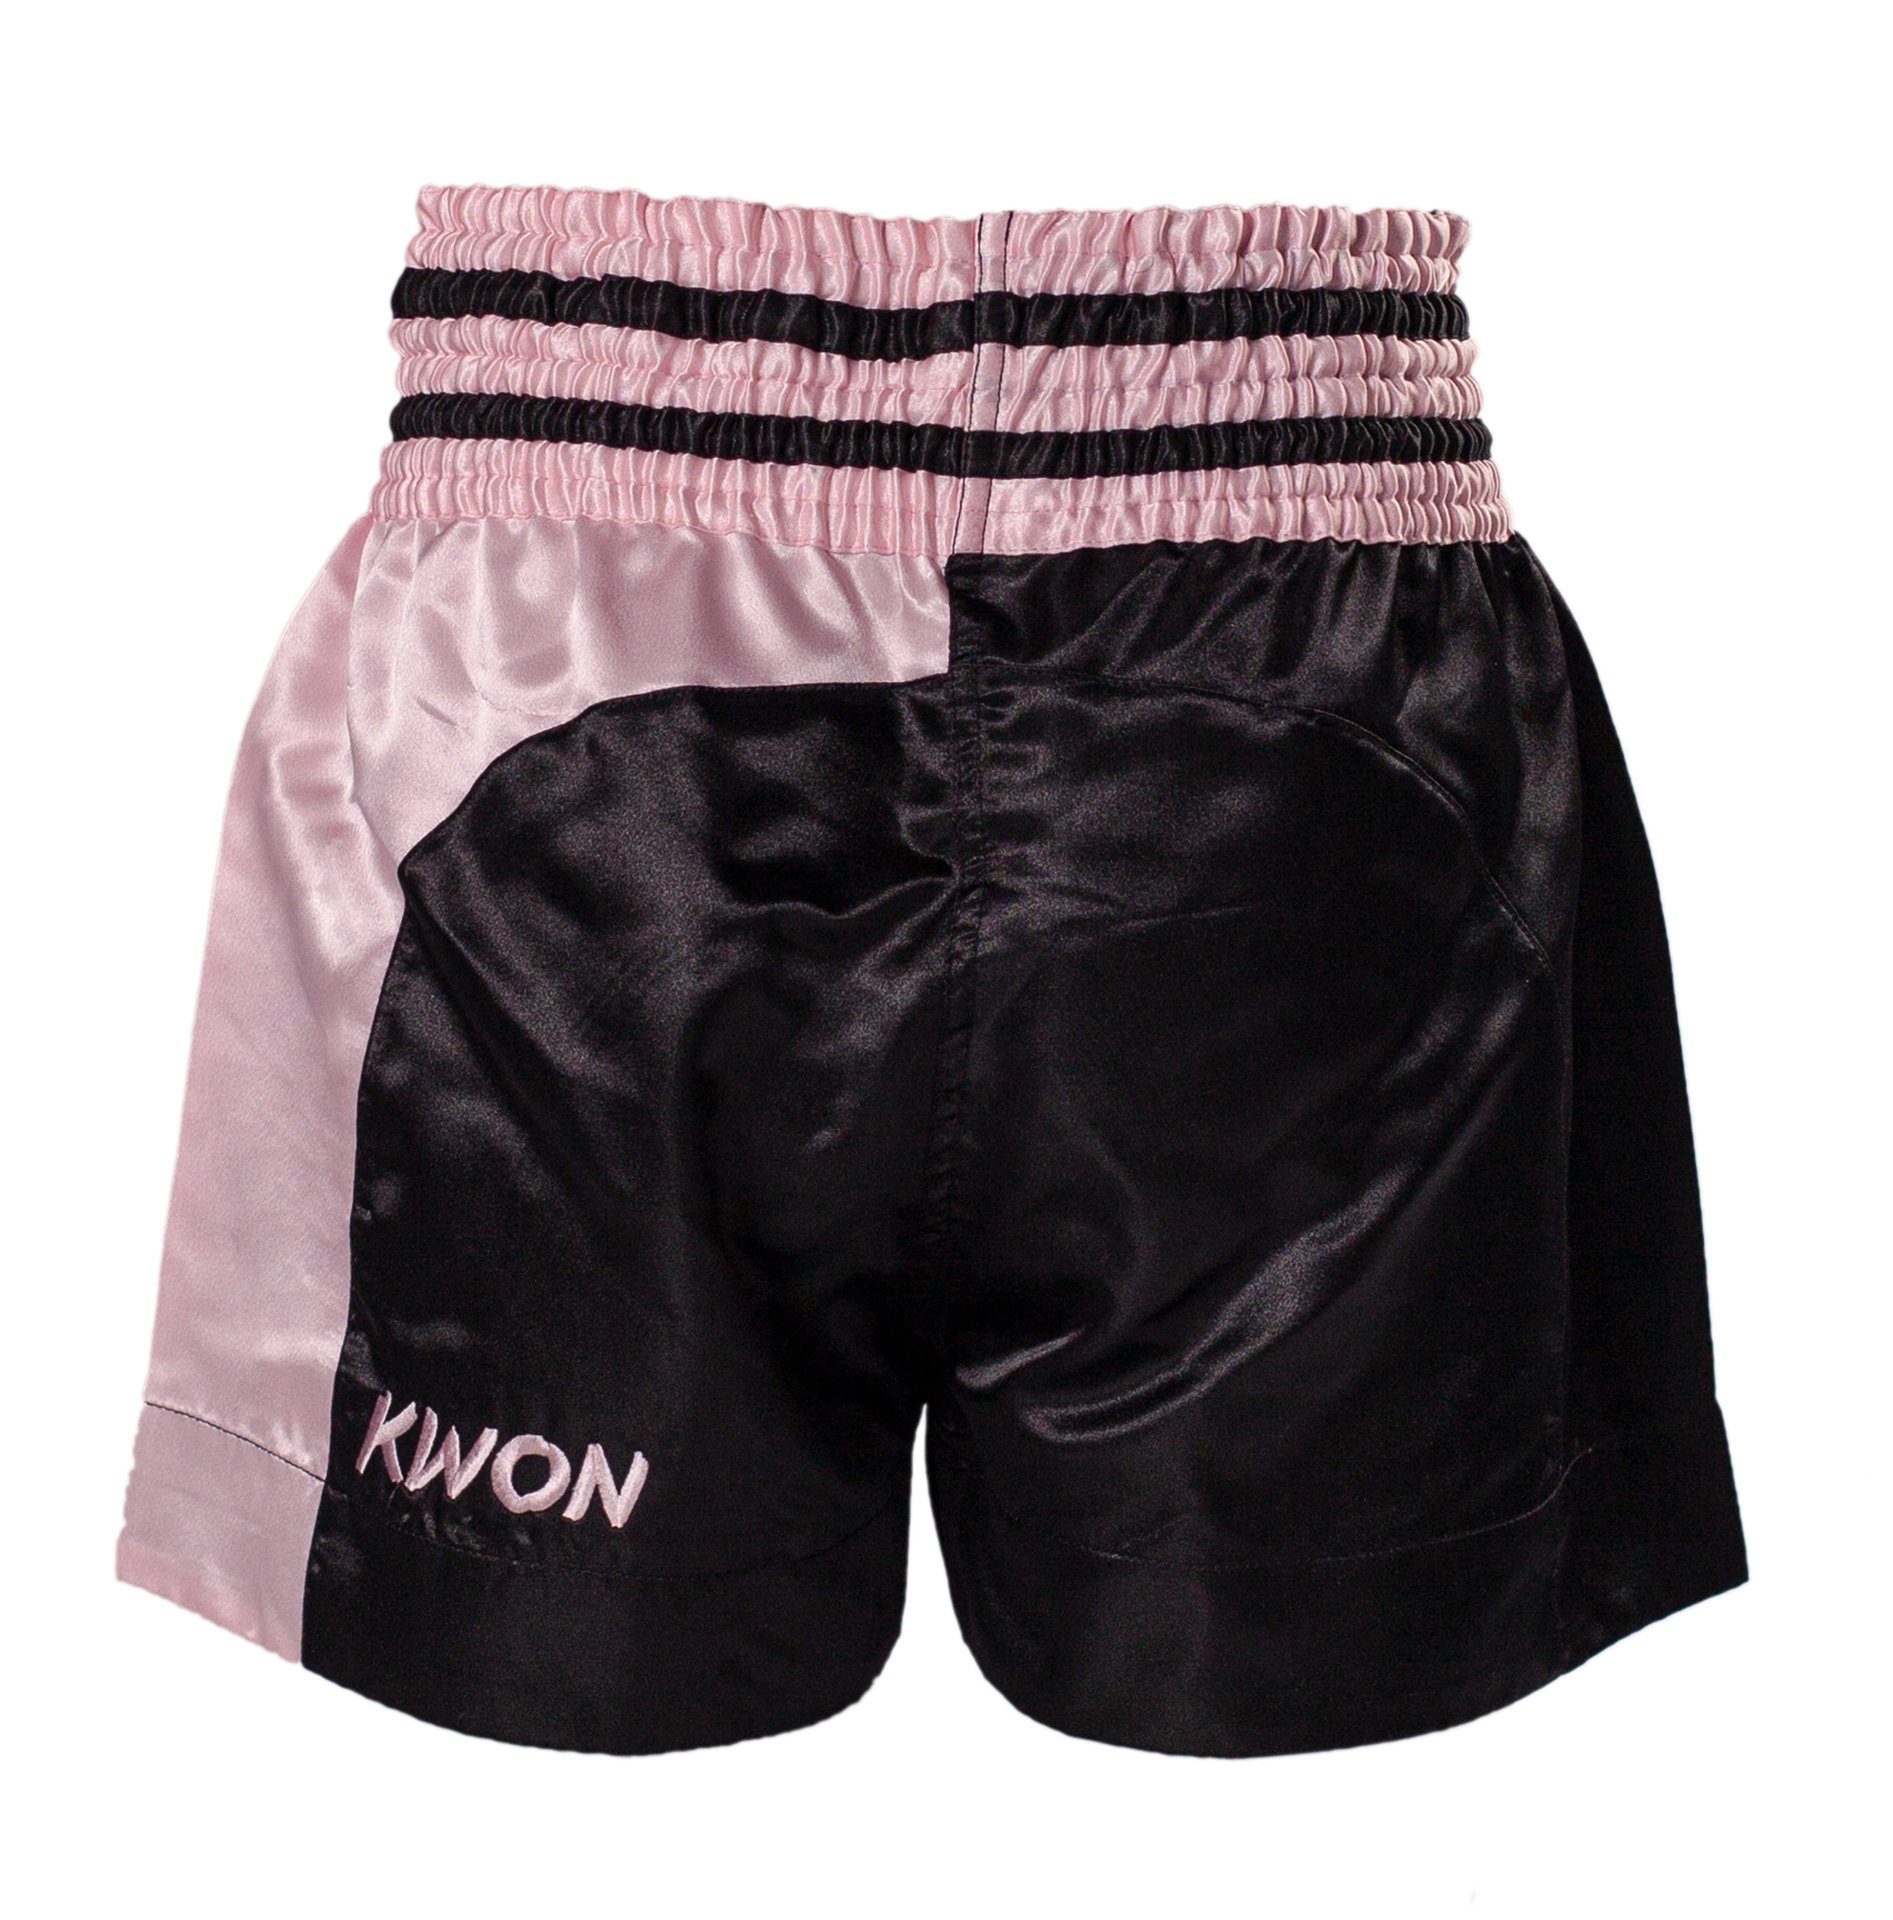 Shorts Box Sterne Thai (Edler KWON Muay kurz MMA Schnitt, Thaiboxhose pink Damen traditioneller rosa Sporthose Look) Kickboxhose